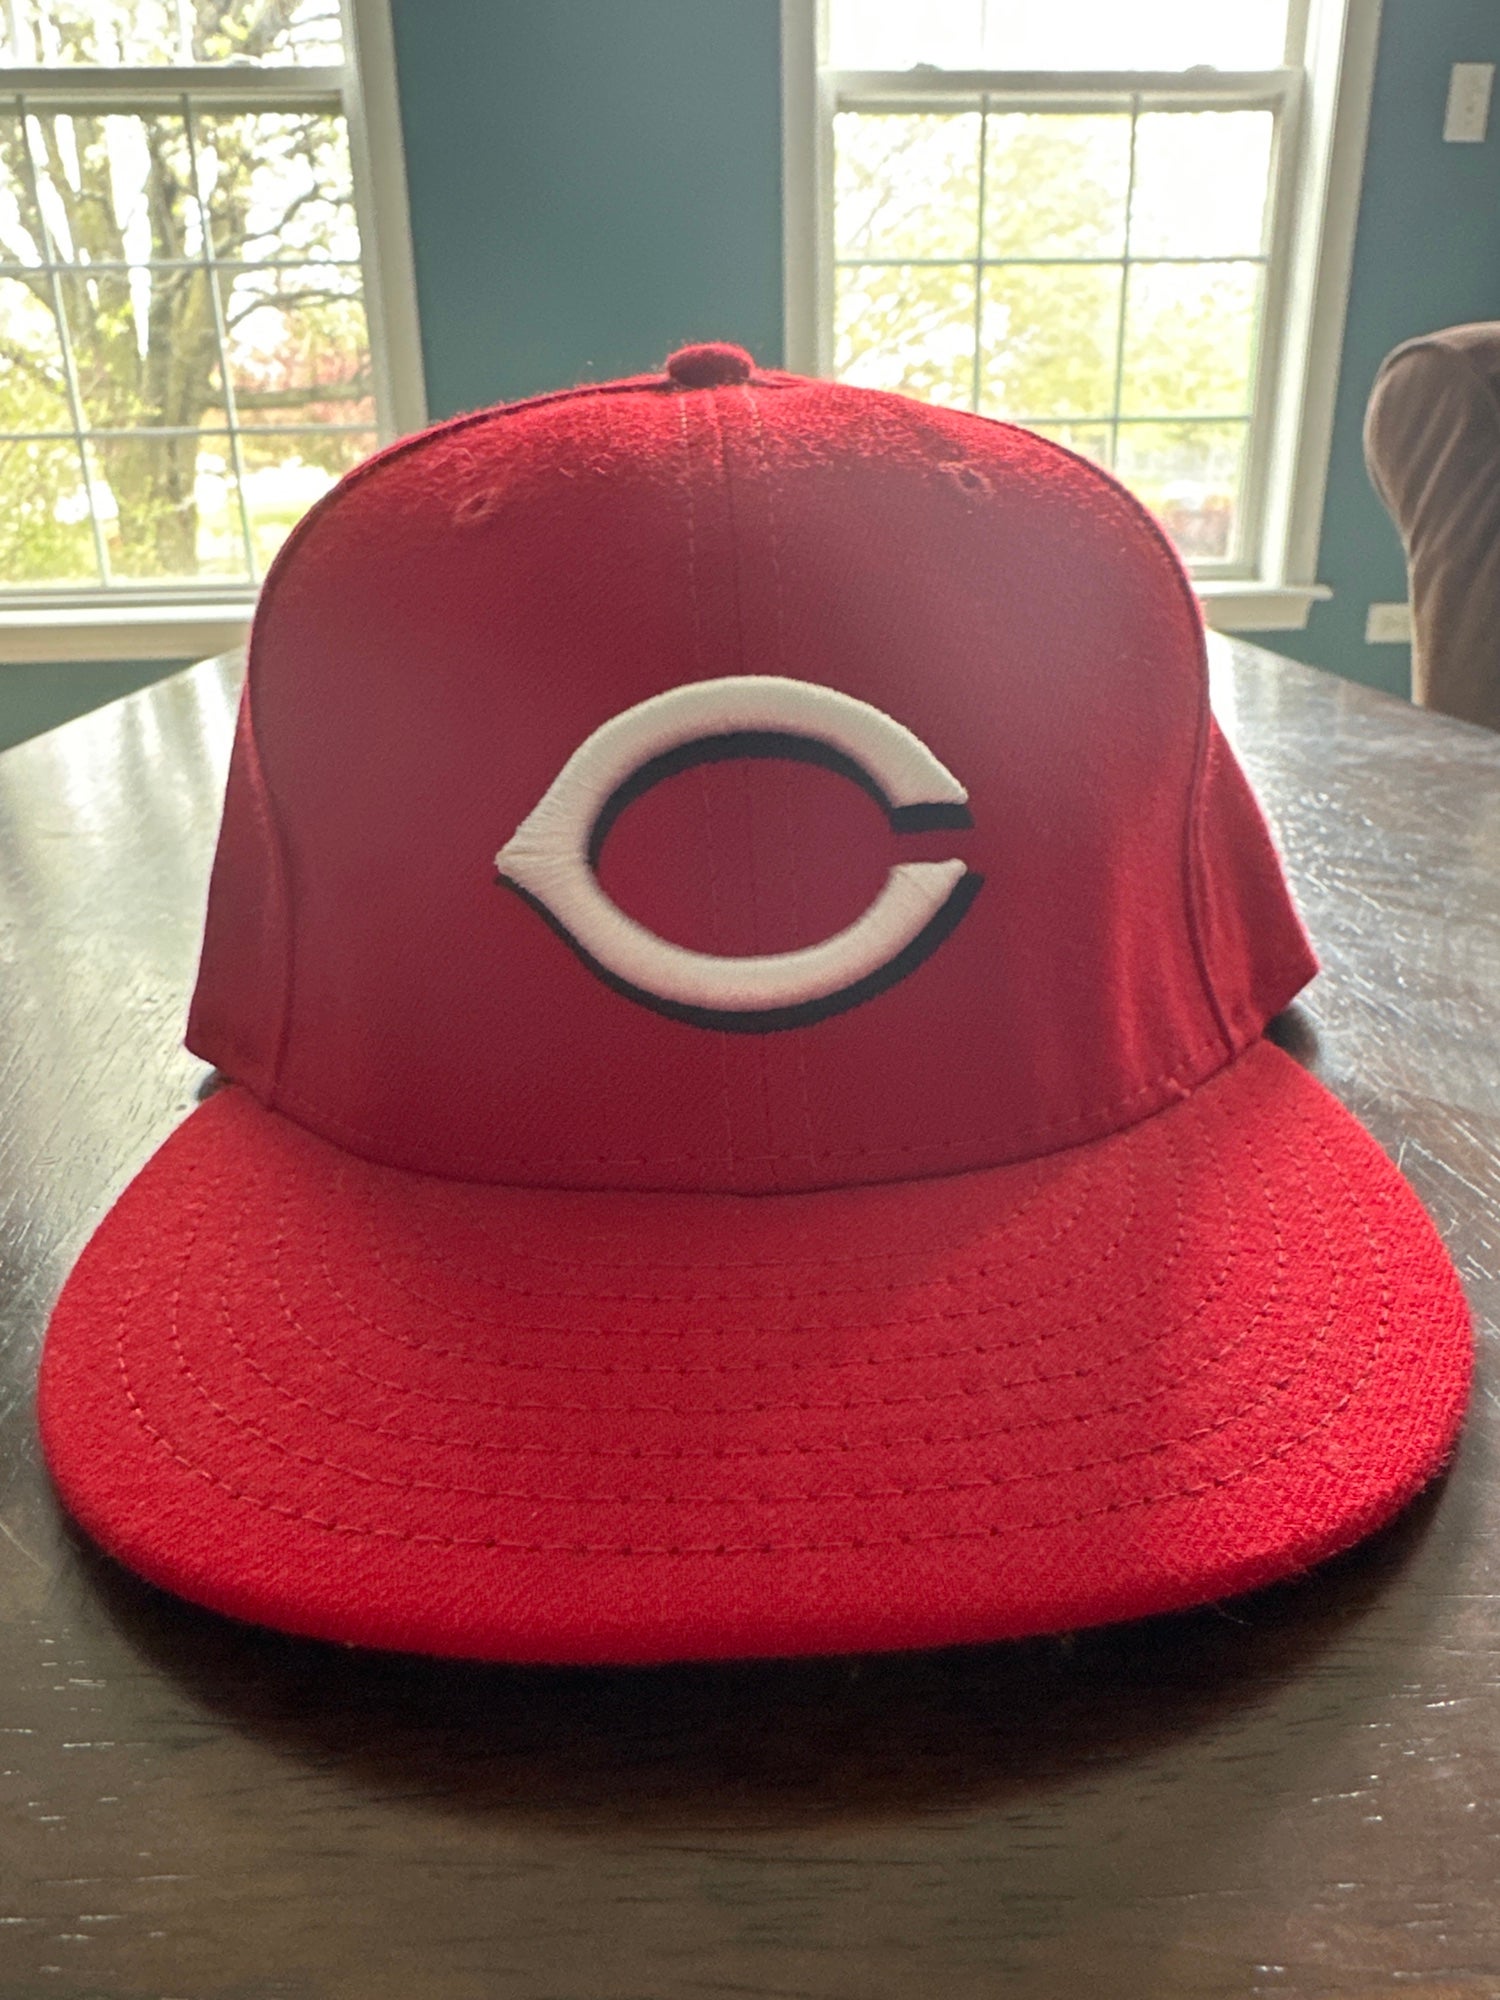 Cincinnati Reds Hat Baseball Cap Fitted 7 3/8 Devon Vintage MLB Pinstripe  MLB